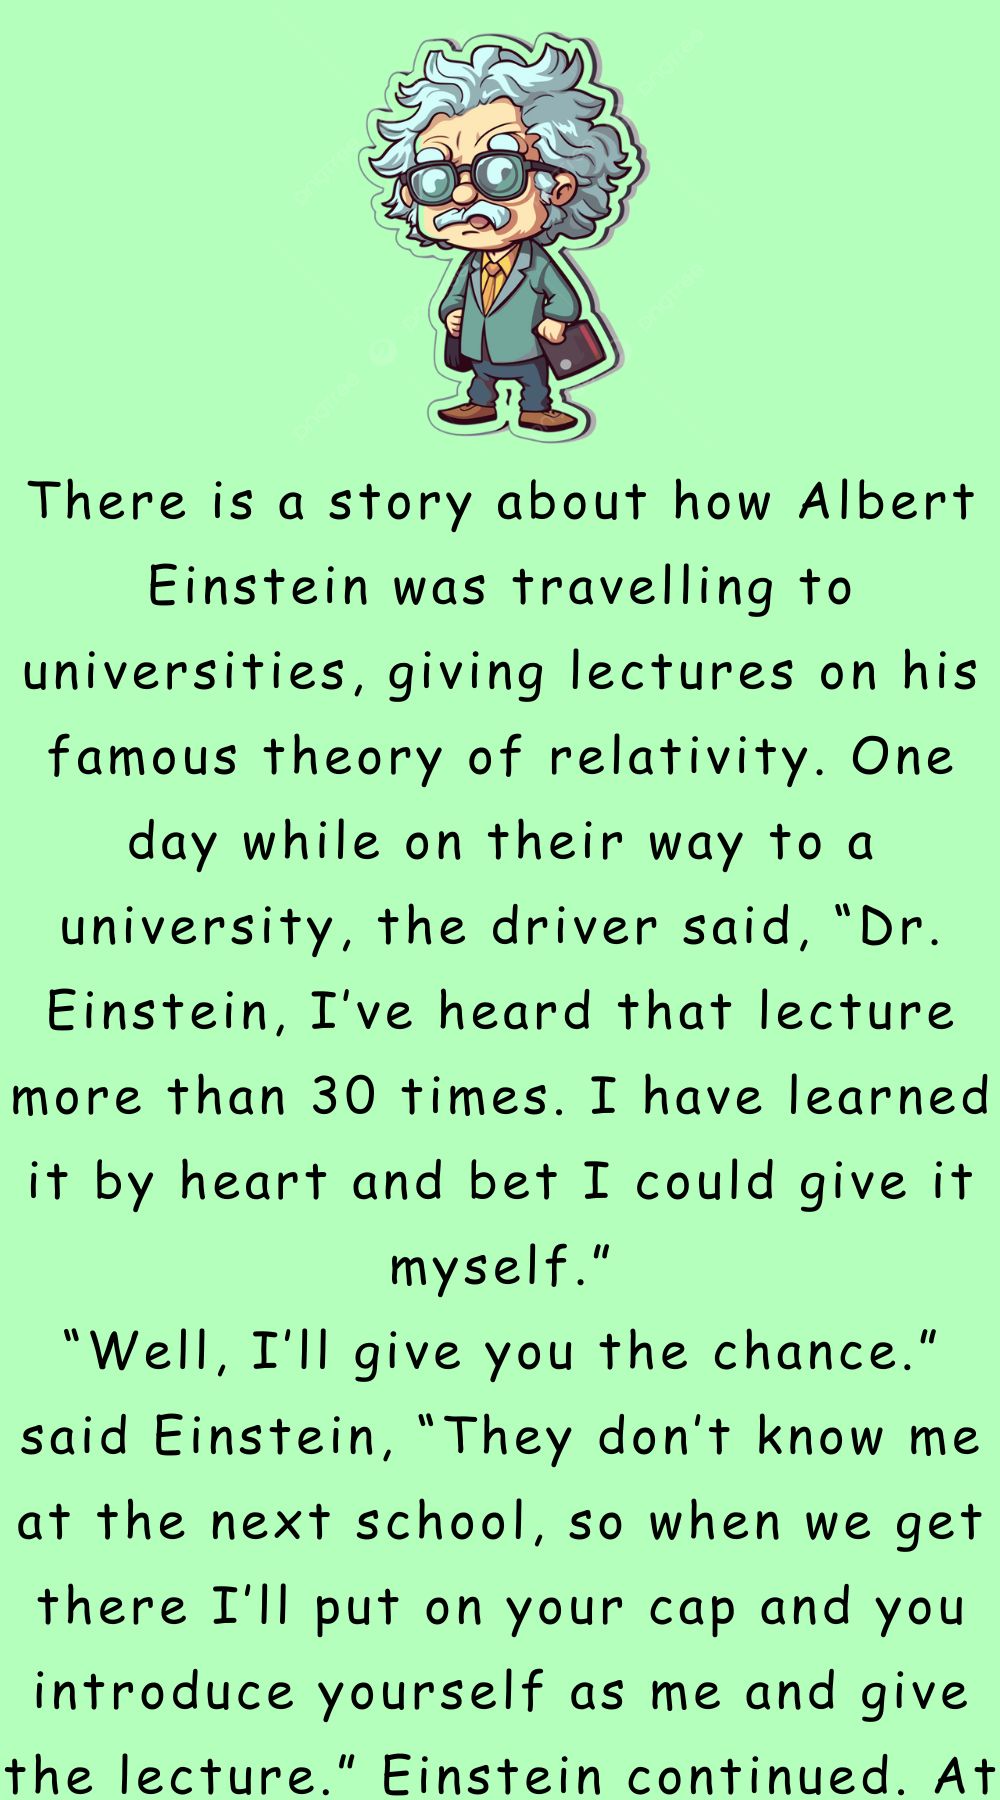 How Albert Einstein was travelling to universities